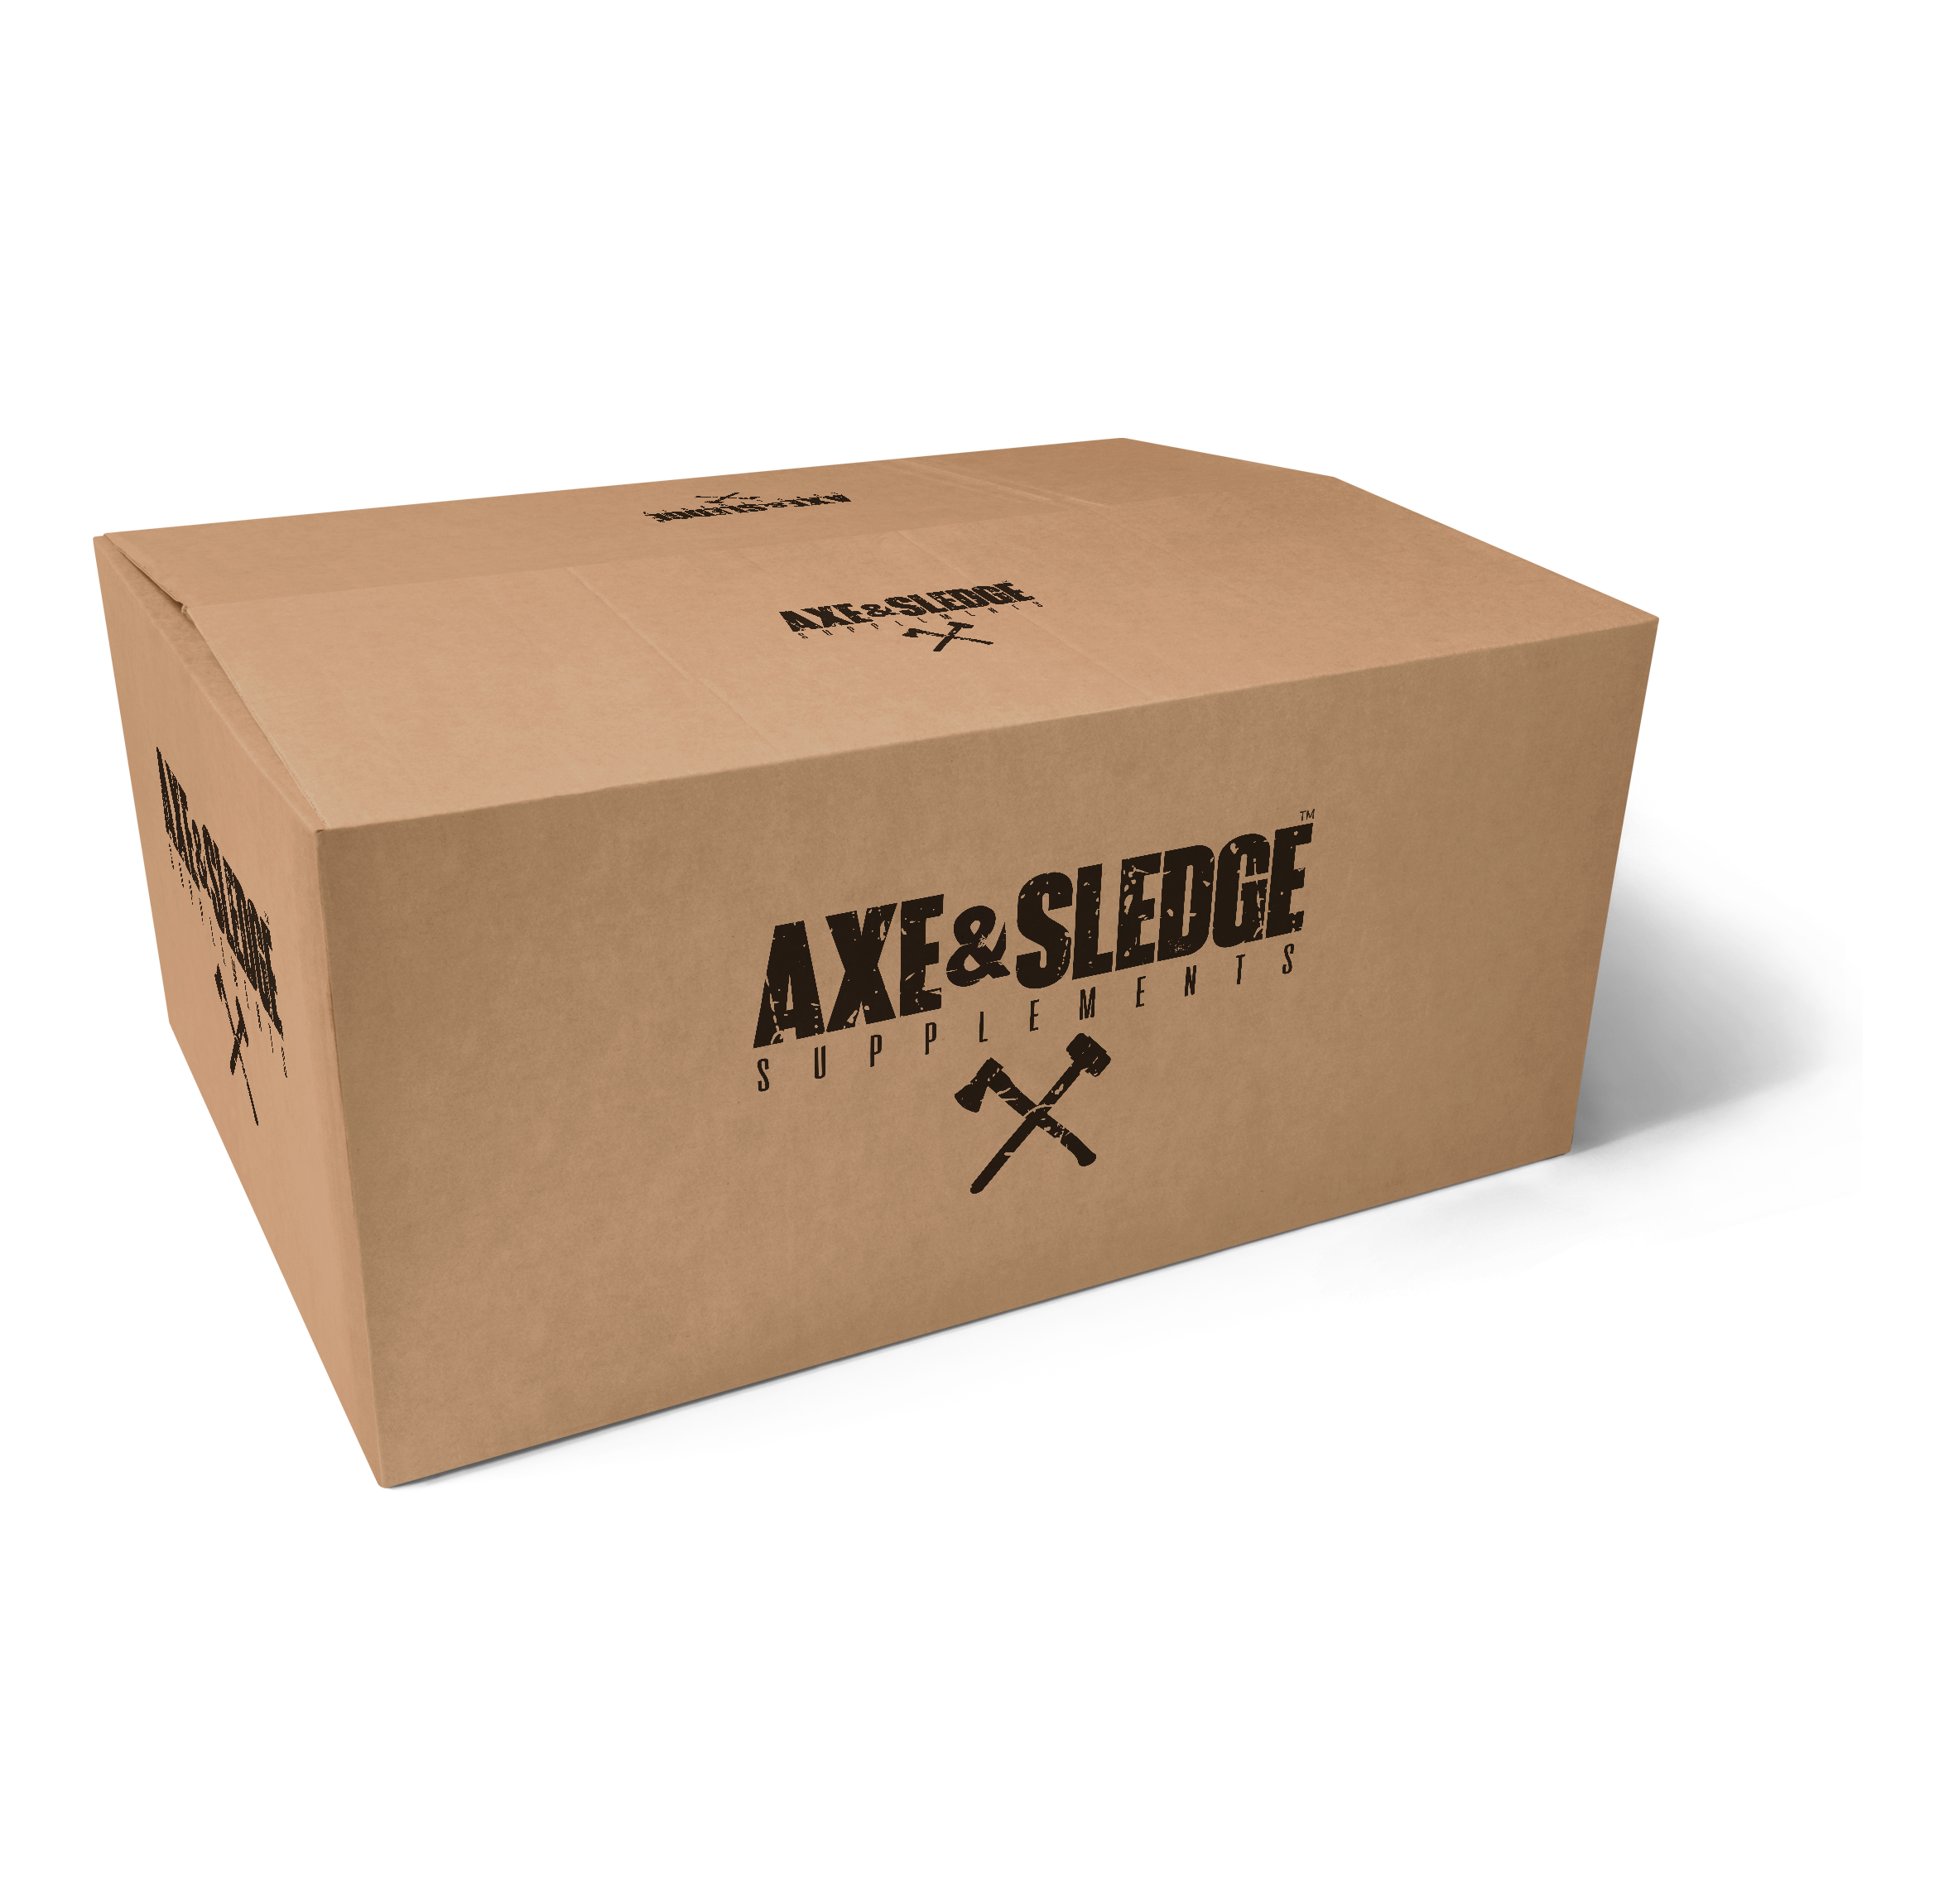 Tuned Up Universal Koozie - Axe & Sledge Supplements